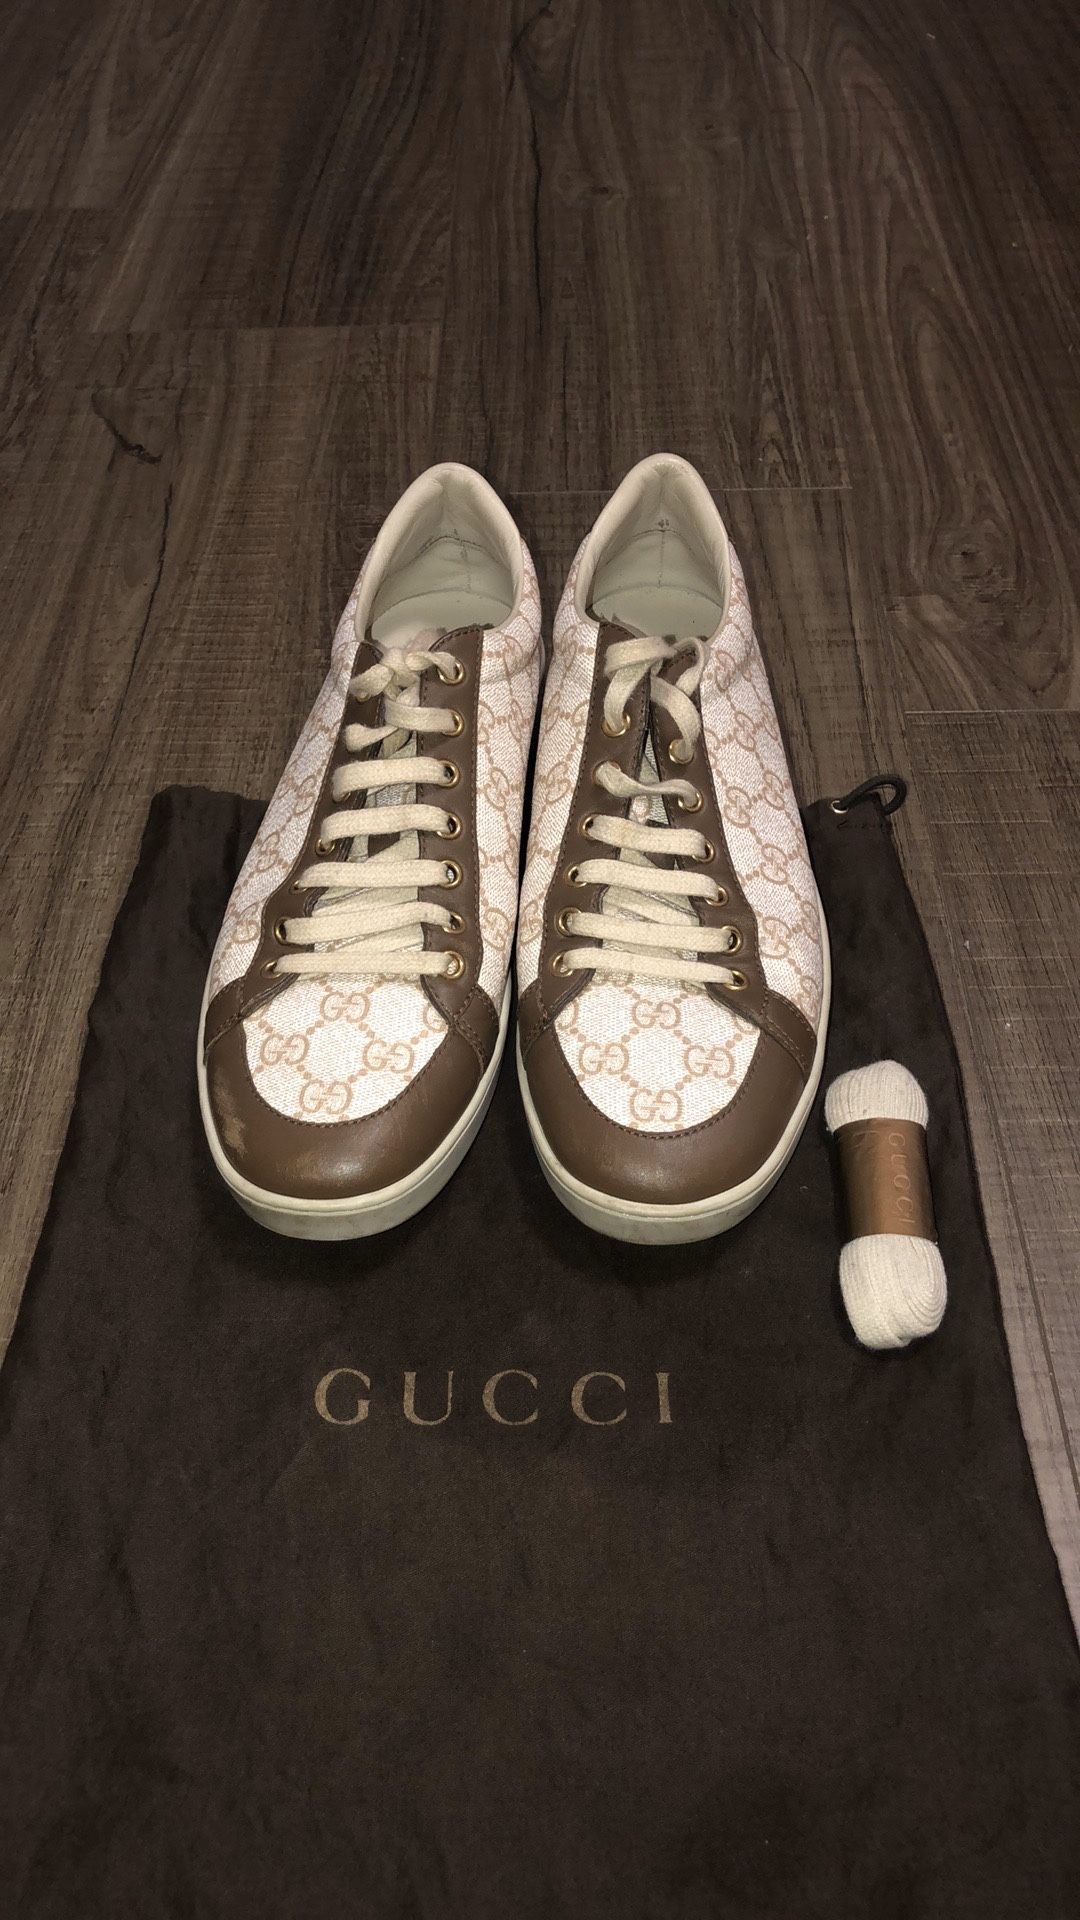 Gucci sneakers size 40 Monogram